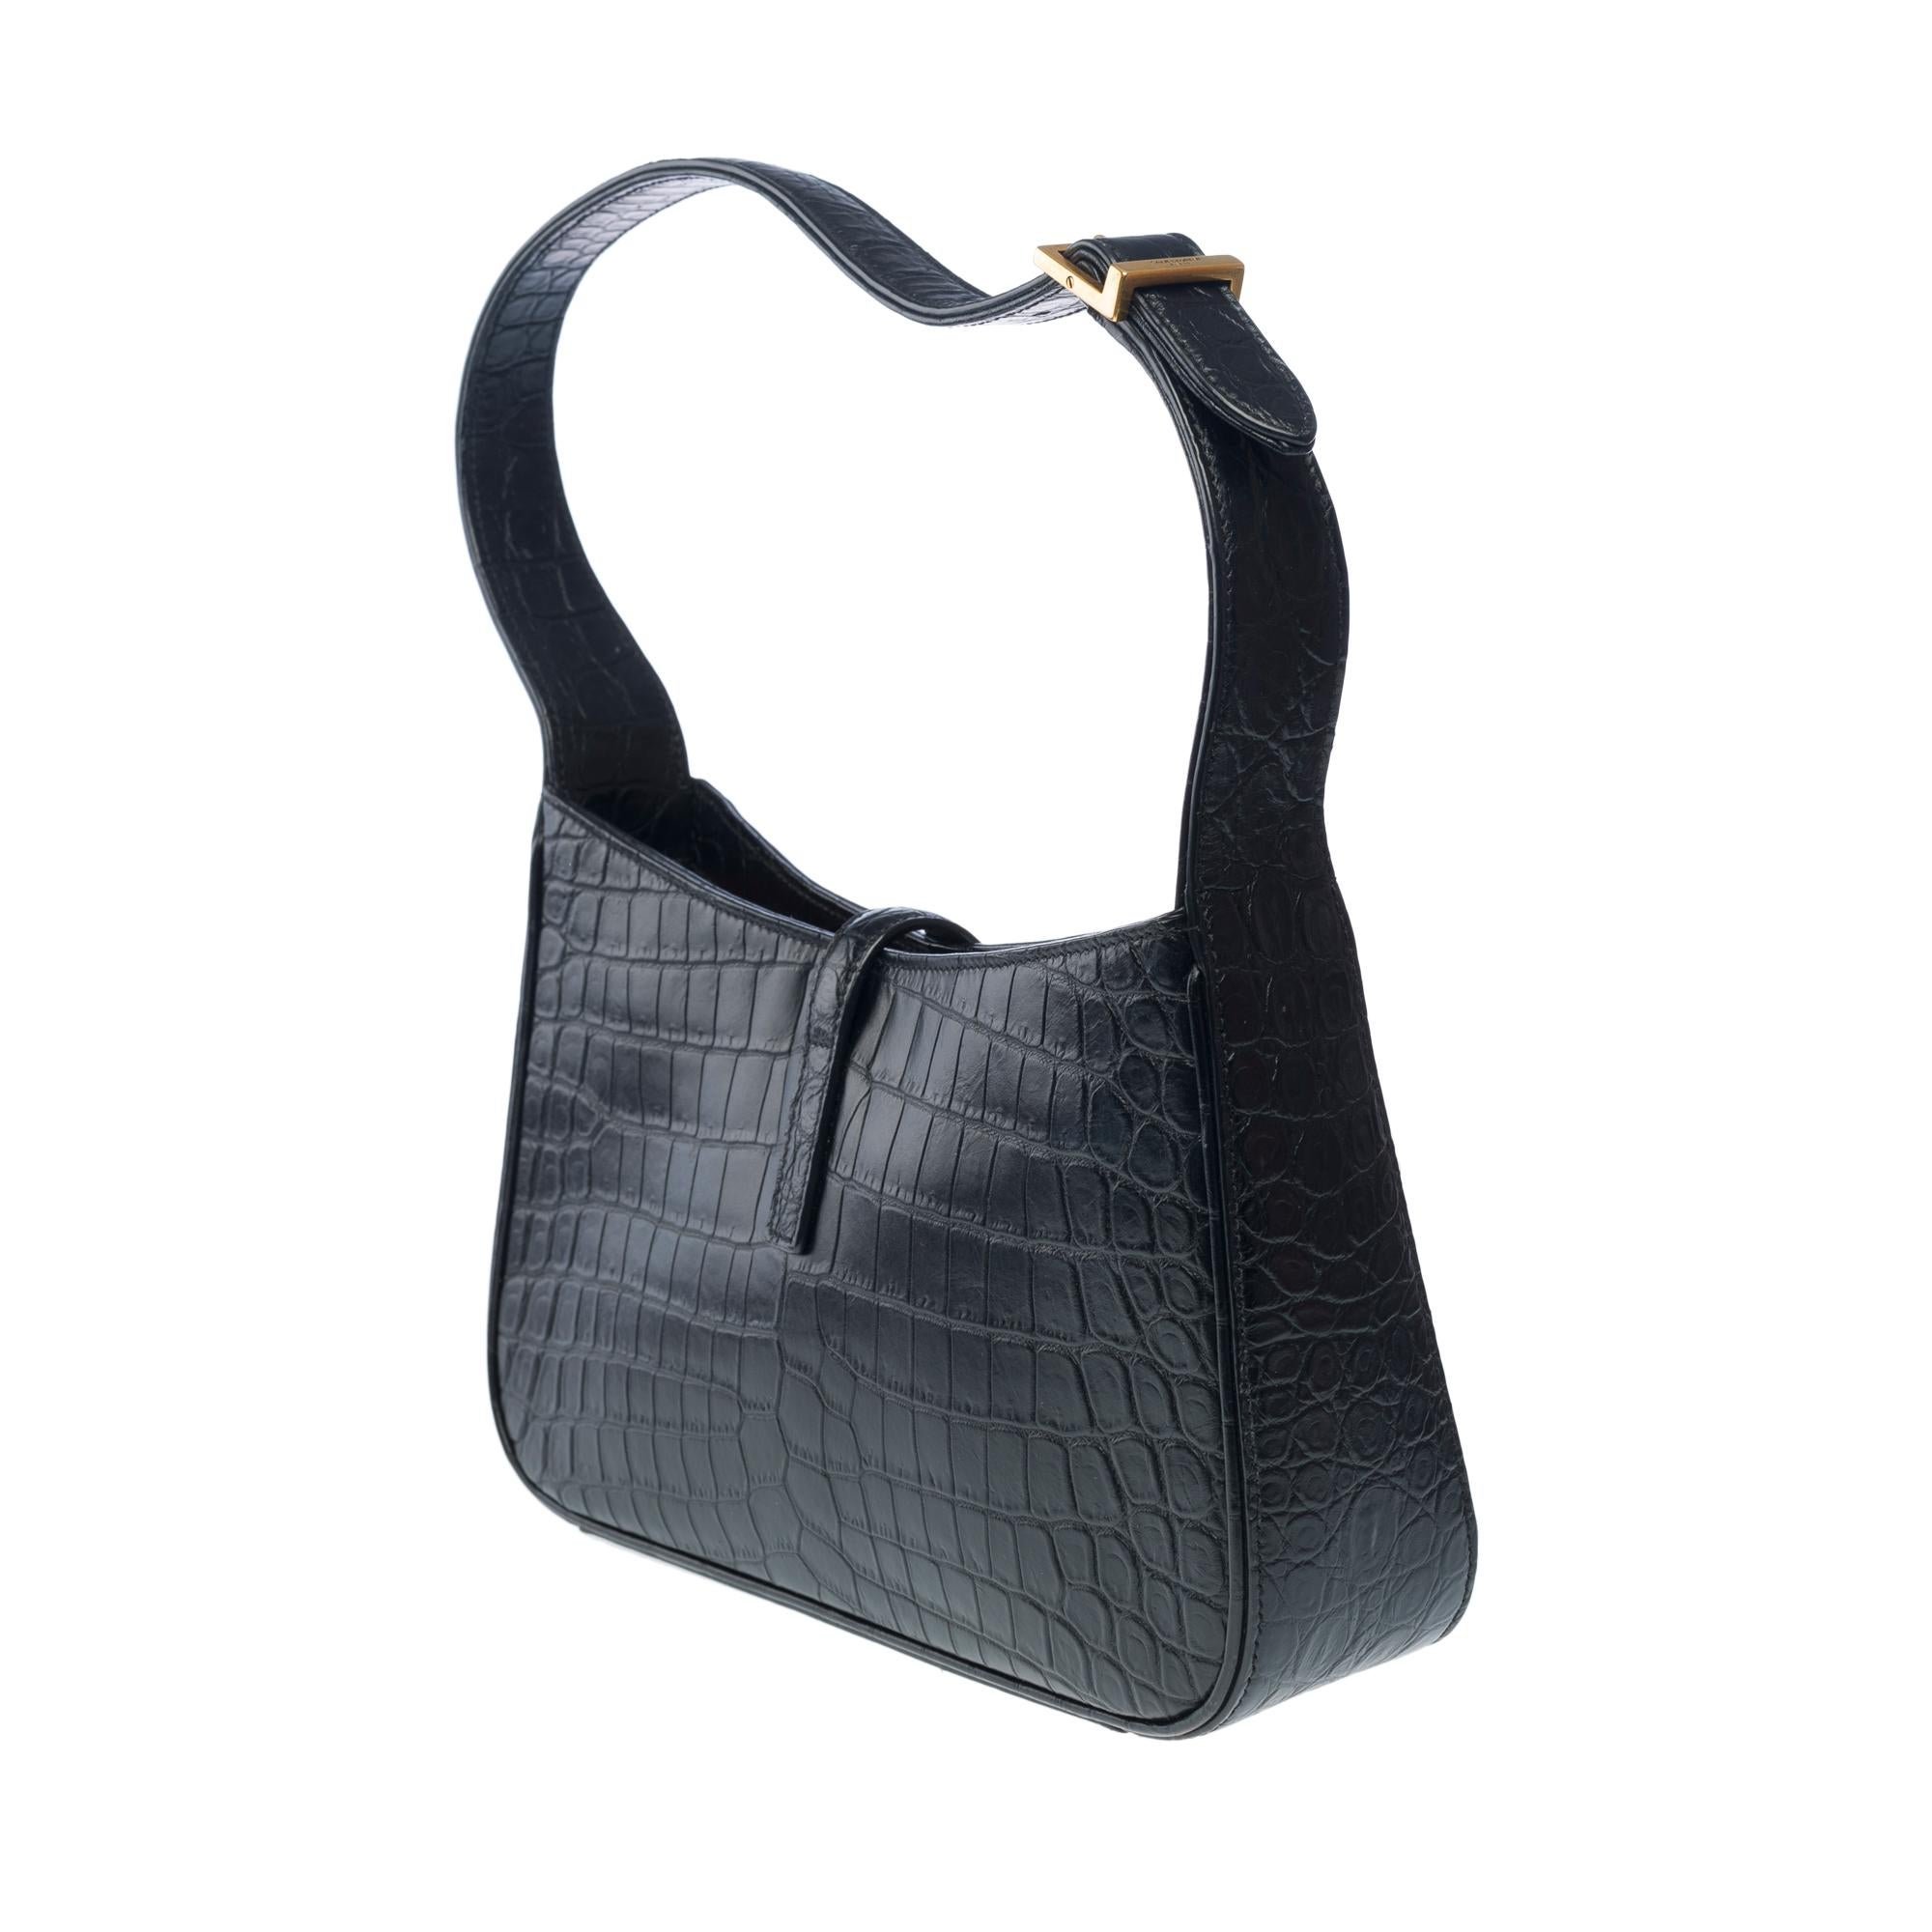 Yves Saint-Laurent 5 à 7 hobo bag in black calf leather, GHW 2